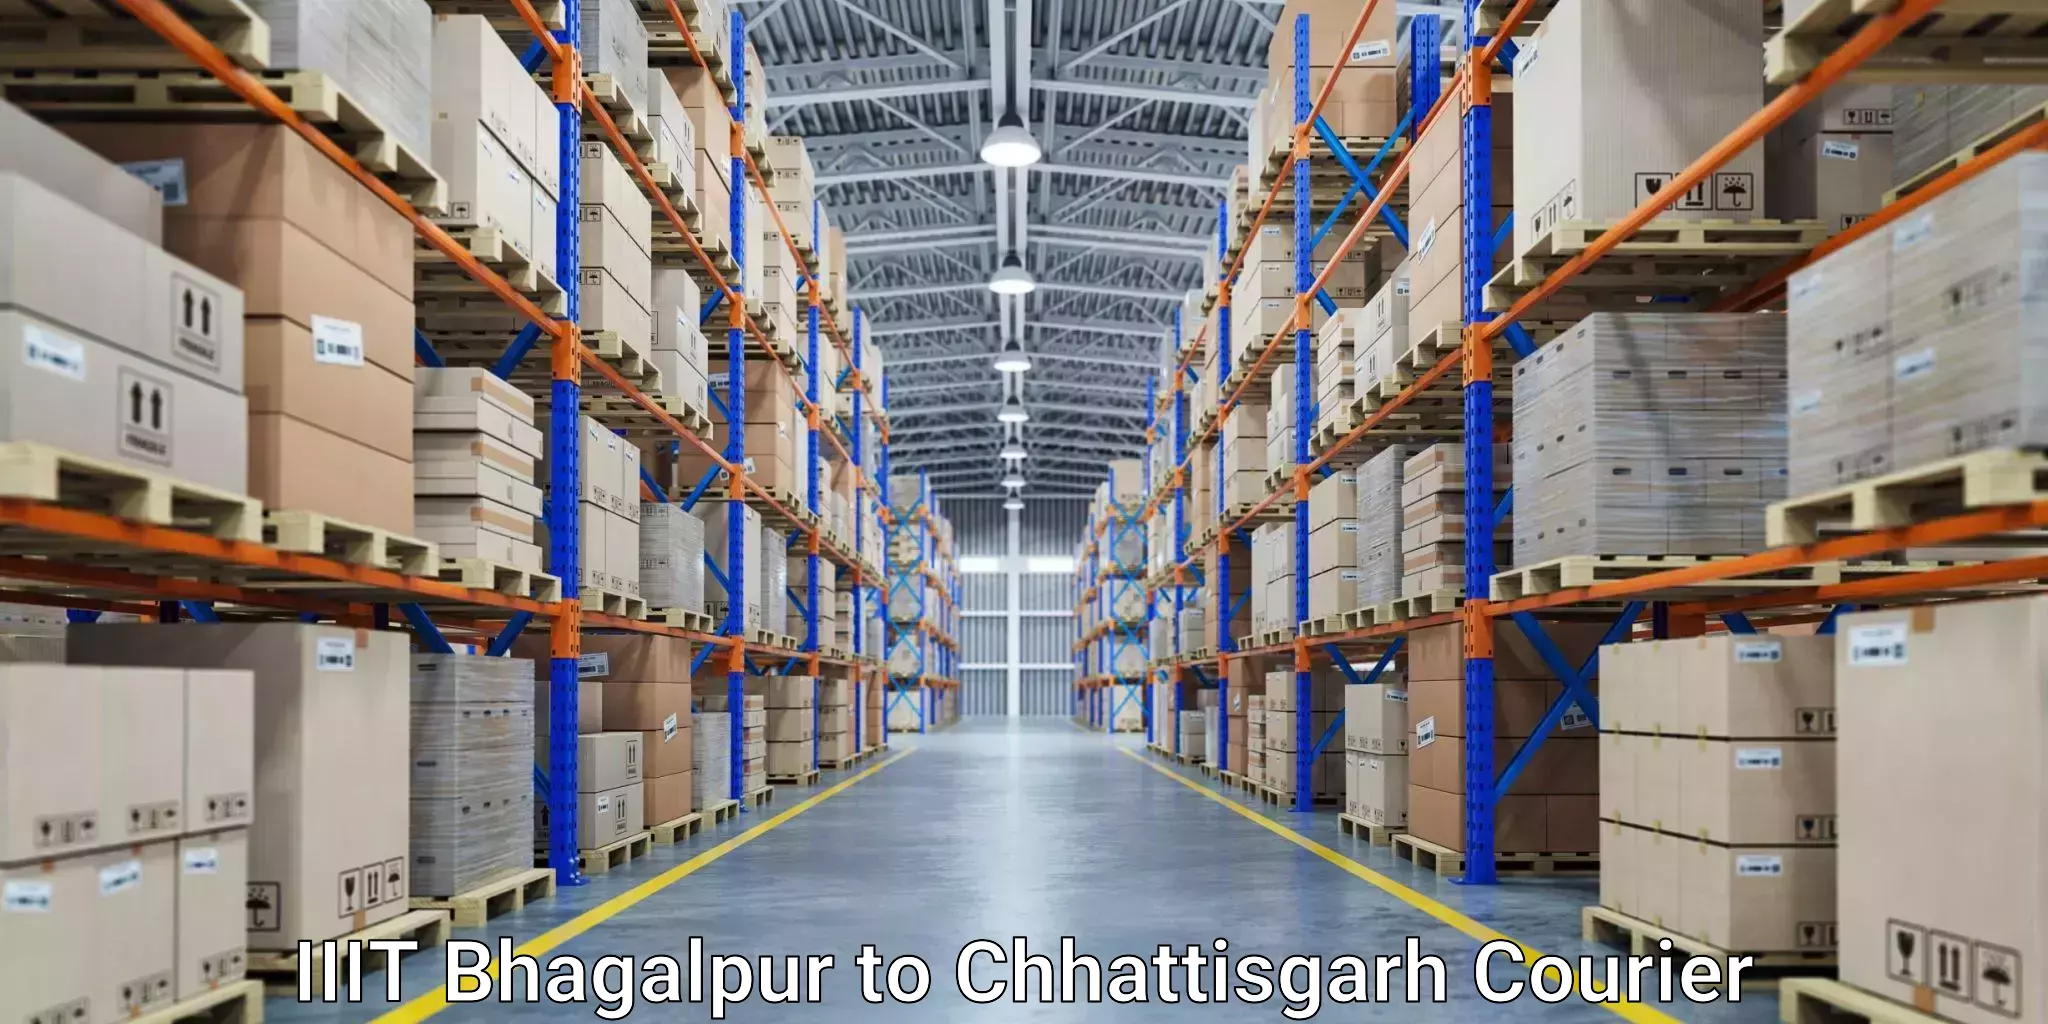 Courier service booking IIIT Bhagalpur to Bhatapara